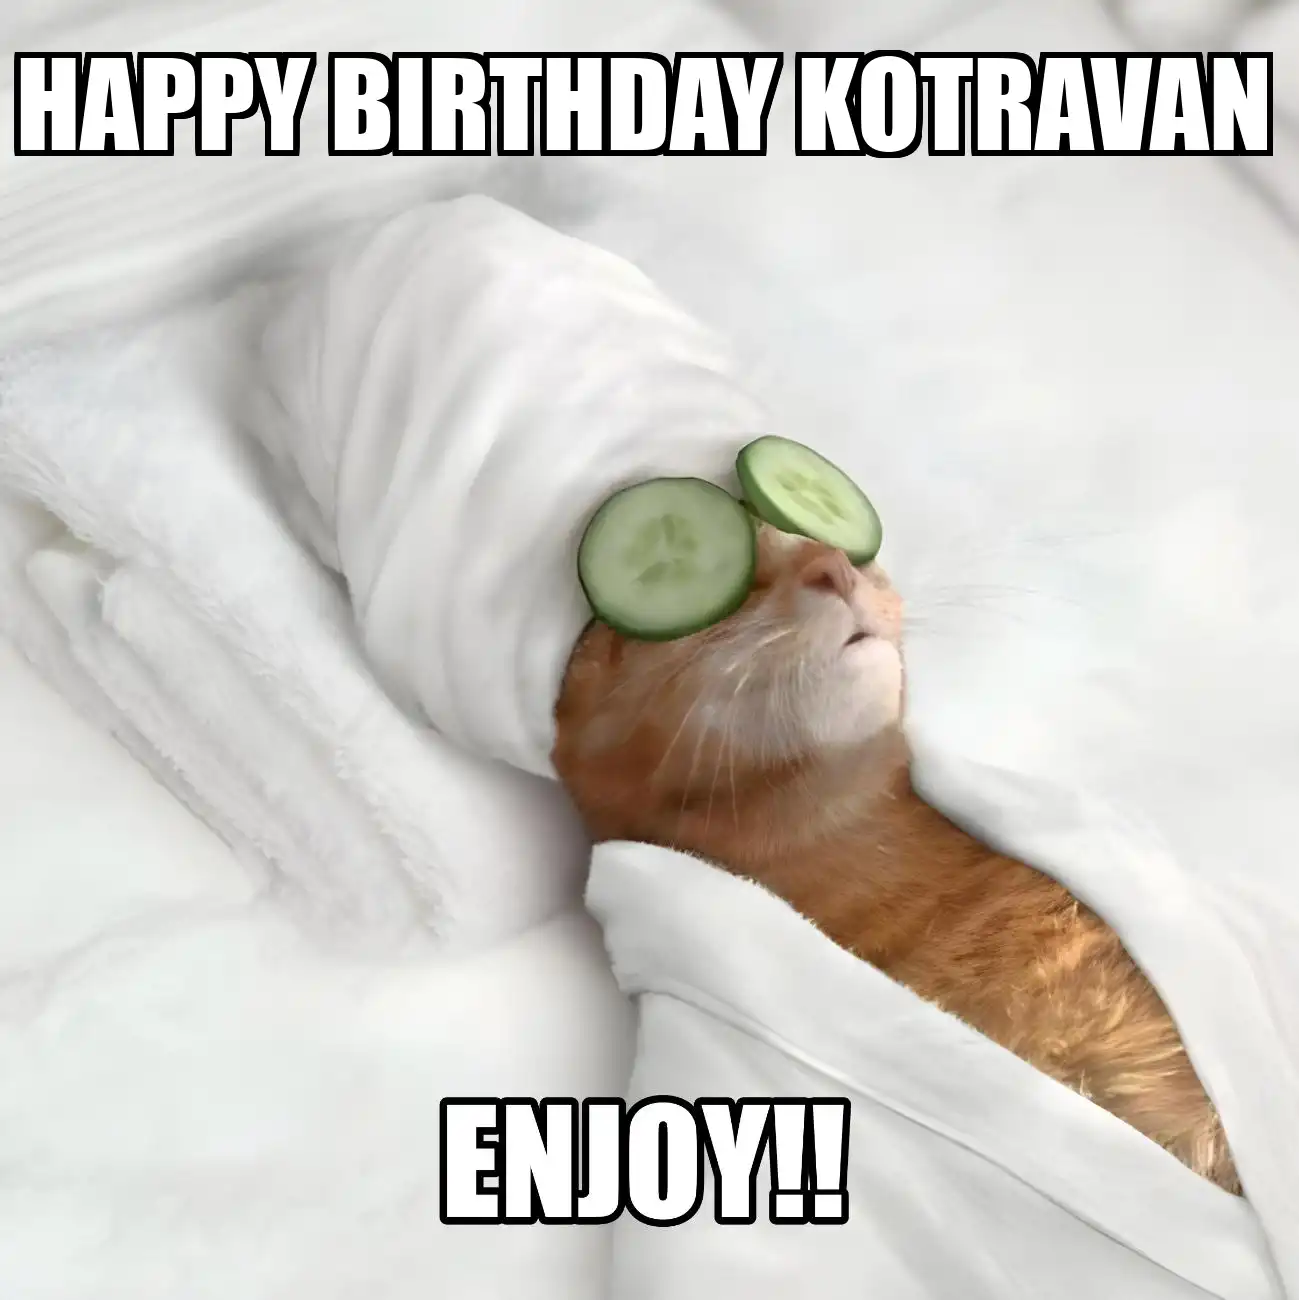 Happy Birthday Kotravan Enjoy Cat Meme